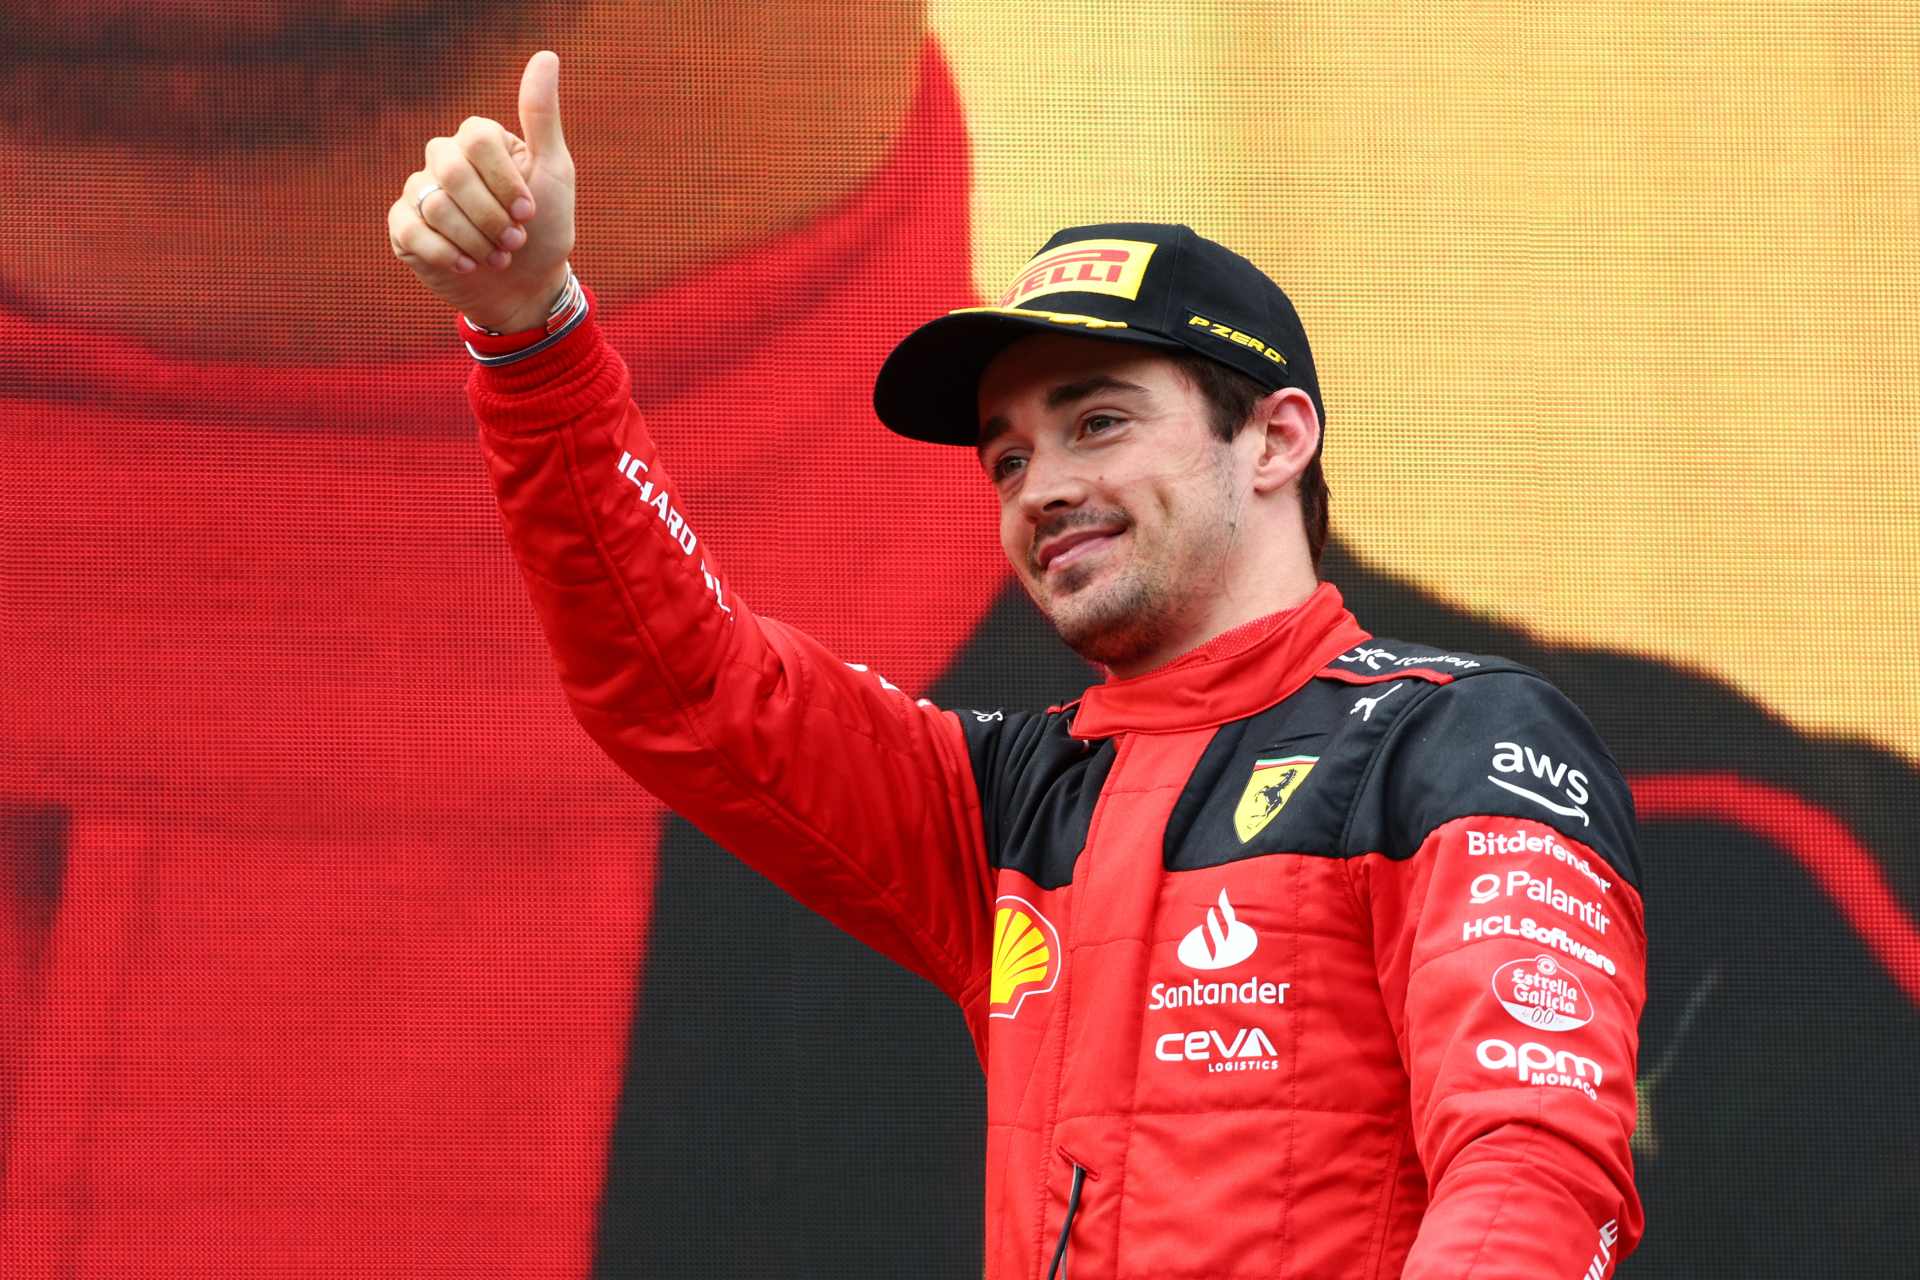 Ferrari chega a 800 pódios na F1 com Leclerc na Áustria e reina absoluta no topo do ranking